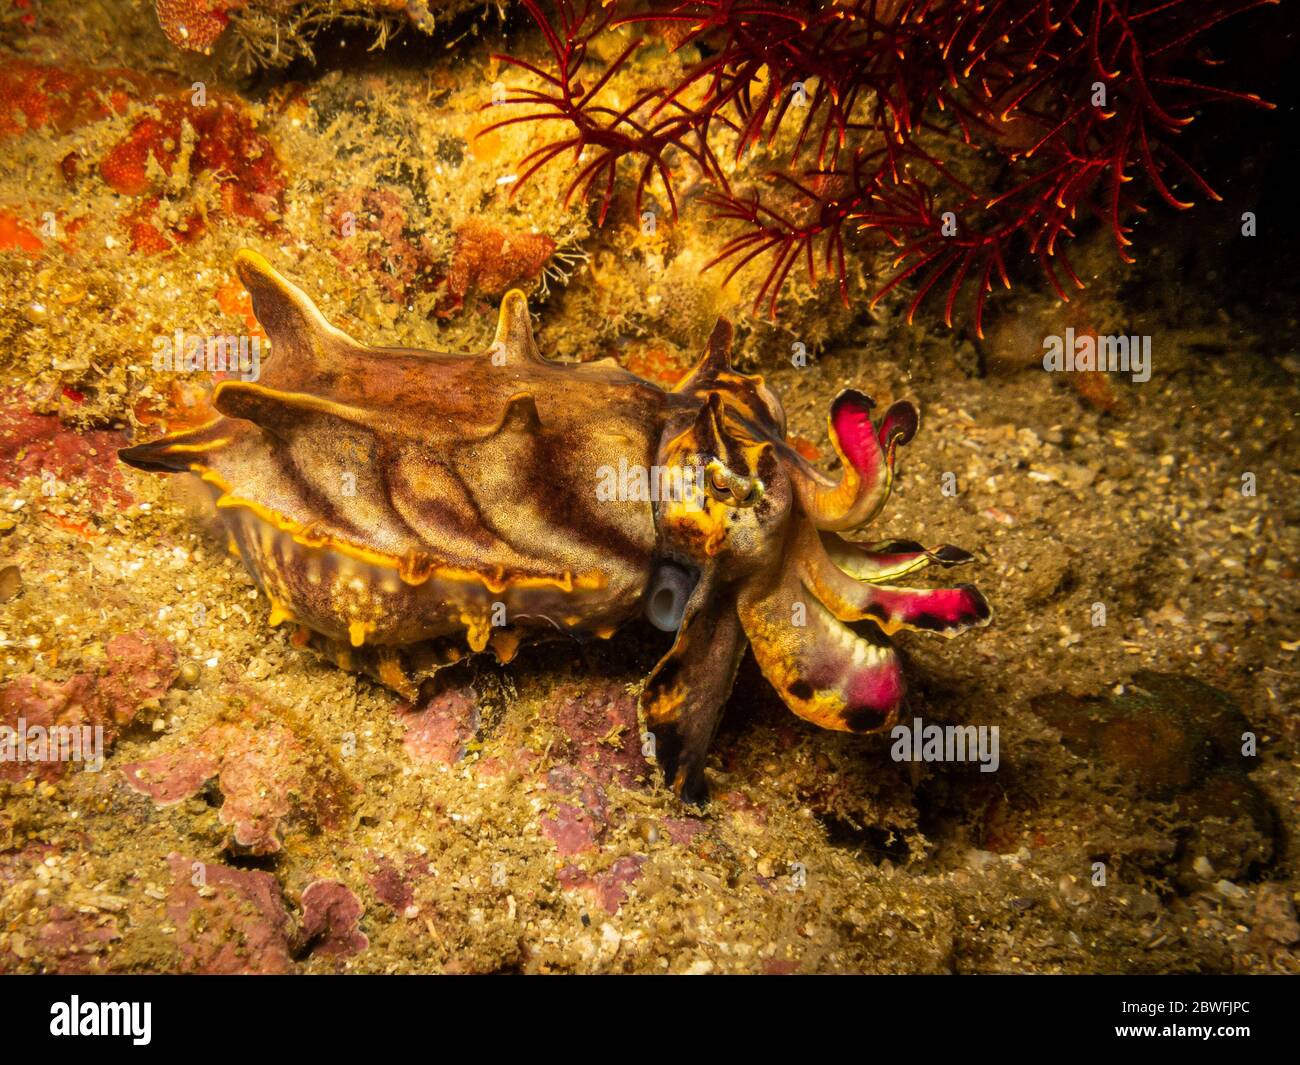 Pesci cutlelfish (Metasepia pfefferi) fiammeggiante in una barriera corallina di Puerto Galera nelle Filippine. Questa seppia è altamente tossica Foto Stock